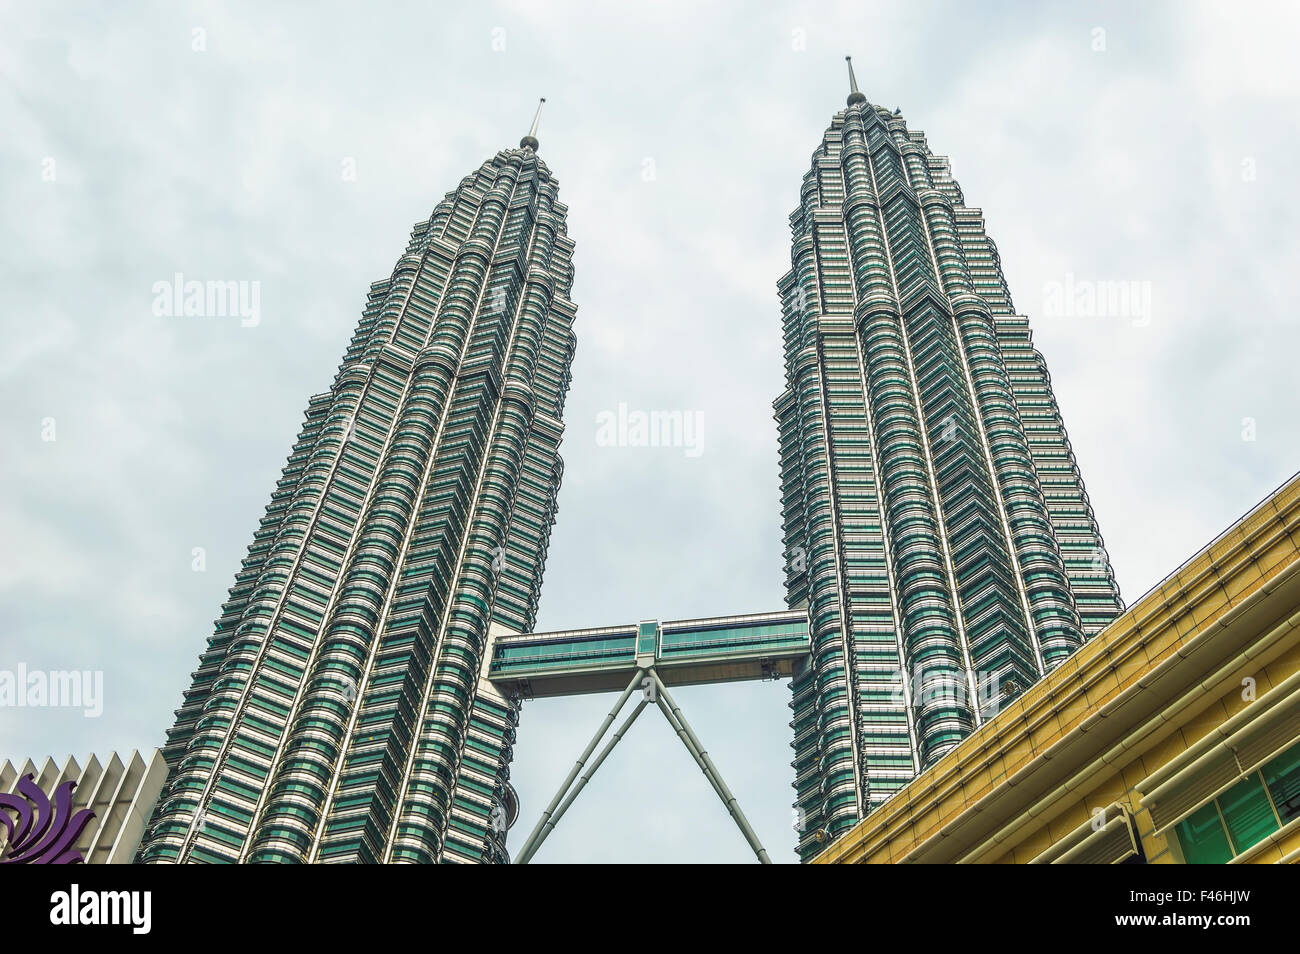 KUALA LUMPUR, MALAYSIA - 10. Dezember 2013 - der Doppeldecker Skybridge zwischen Turm 1 und Turm 2 von den Petronas Twin Towers. Stockfoto